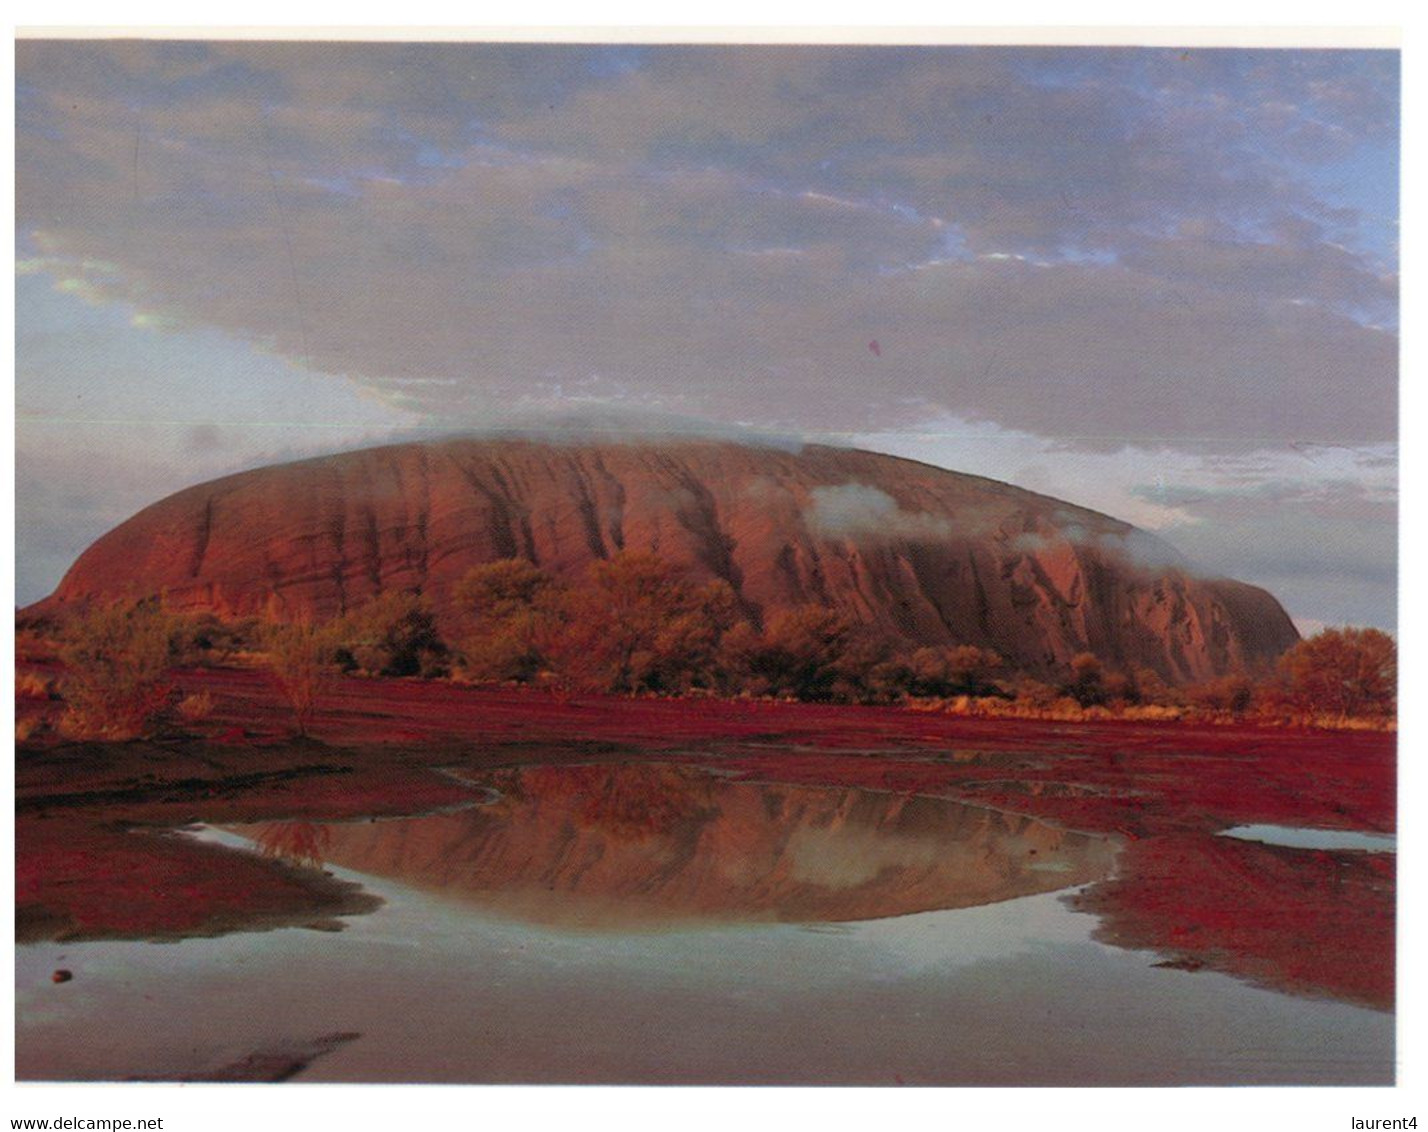 (Y 16) Australia - NT - Central Australia (3 Postcards) - The Red Centre